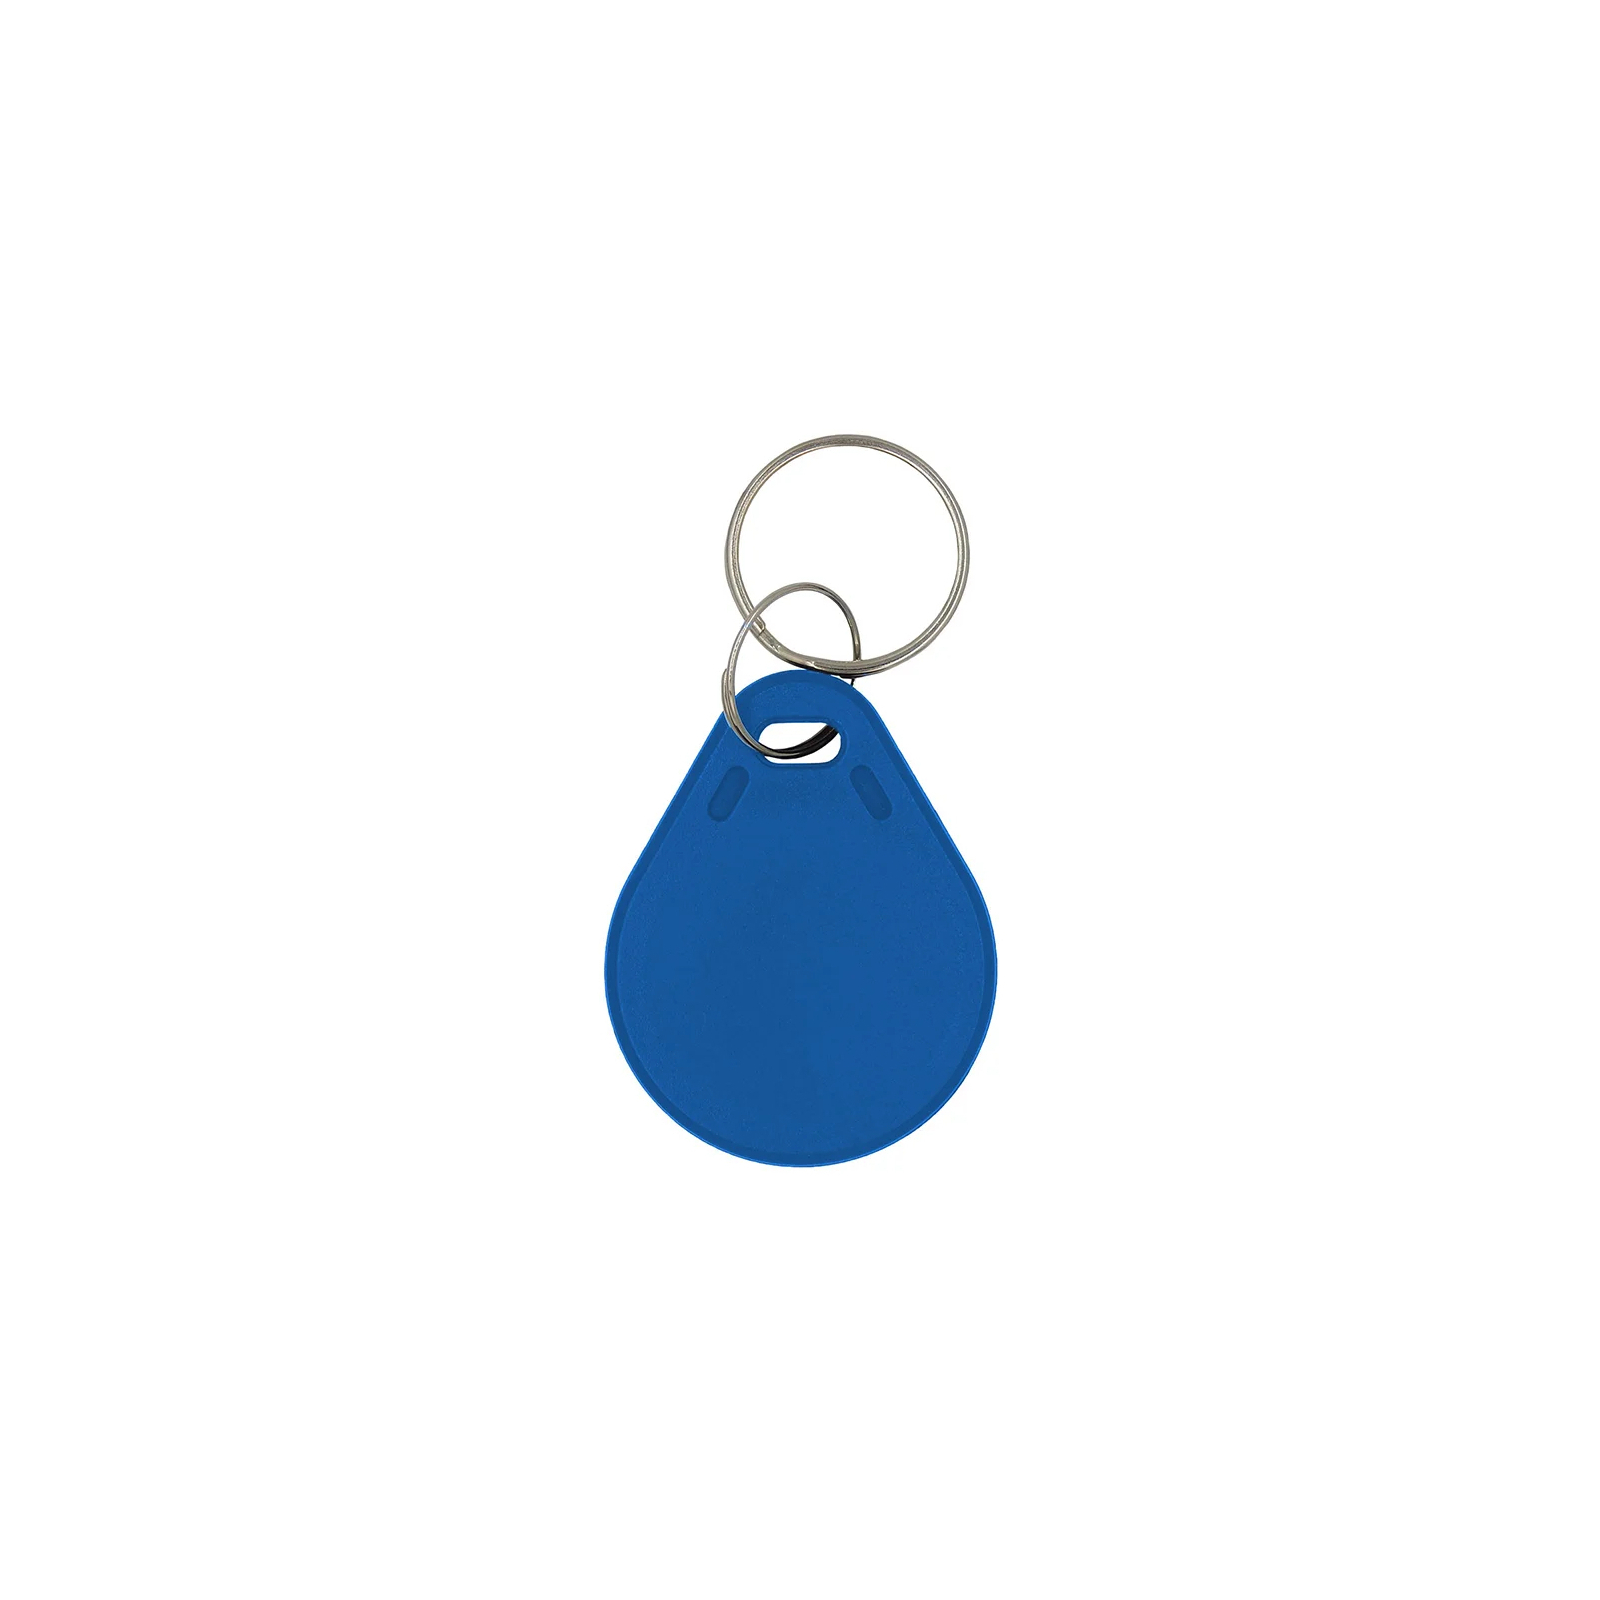 Брелок з чіпом Trinix Proxymity-key Mifare 1К blue (P-key Mifare 1К blue) зображення 2